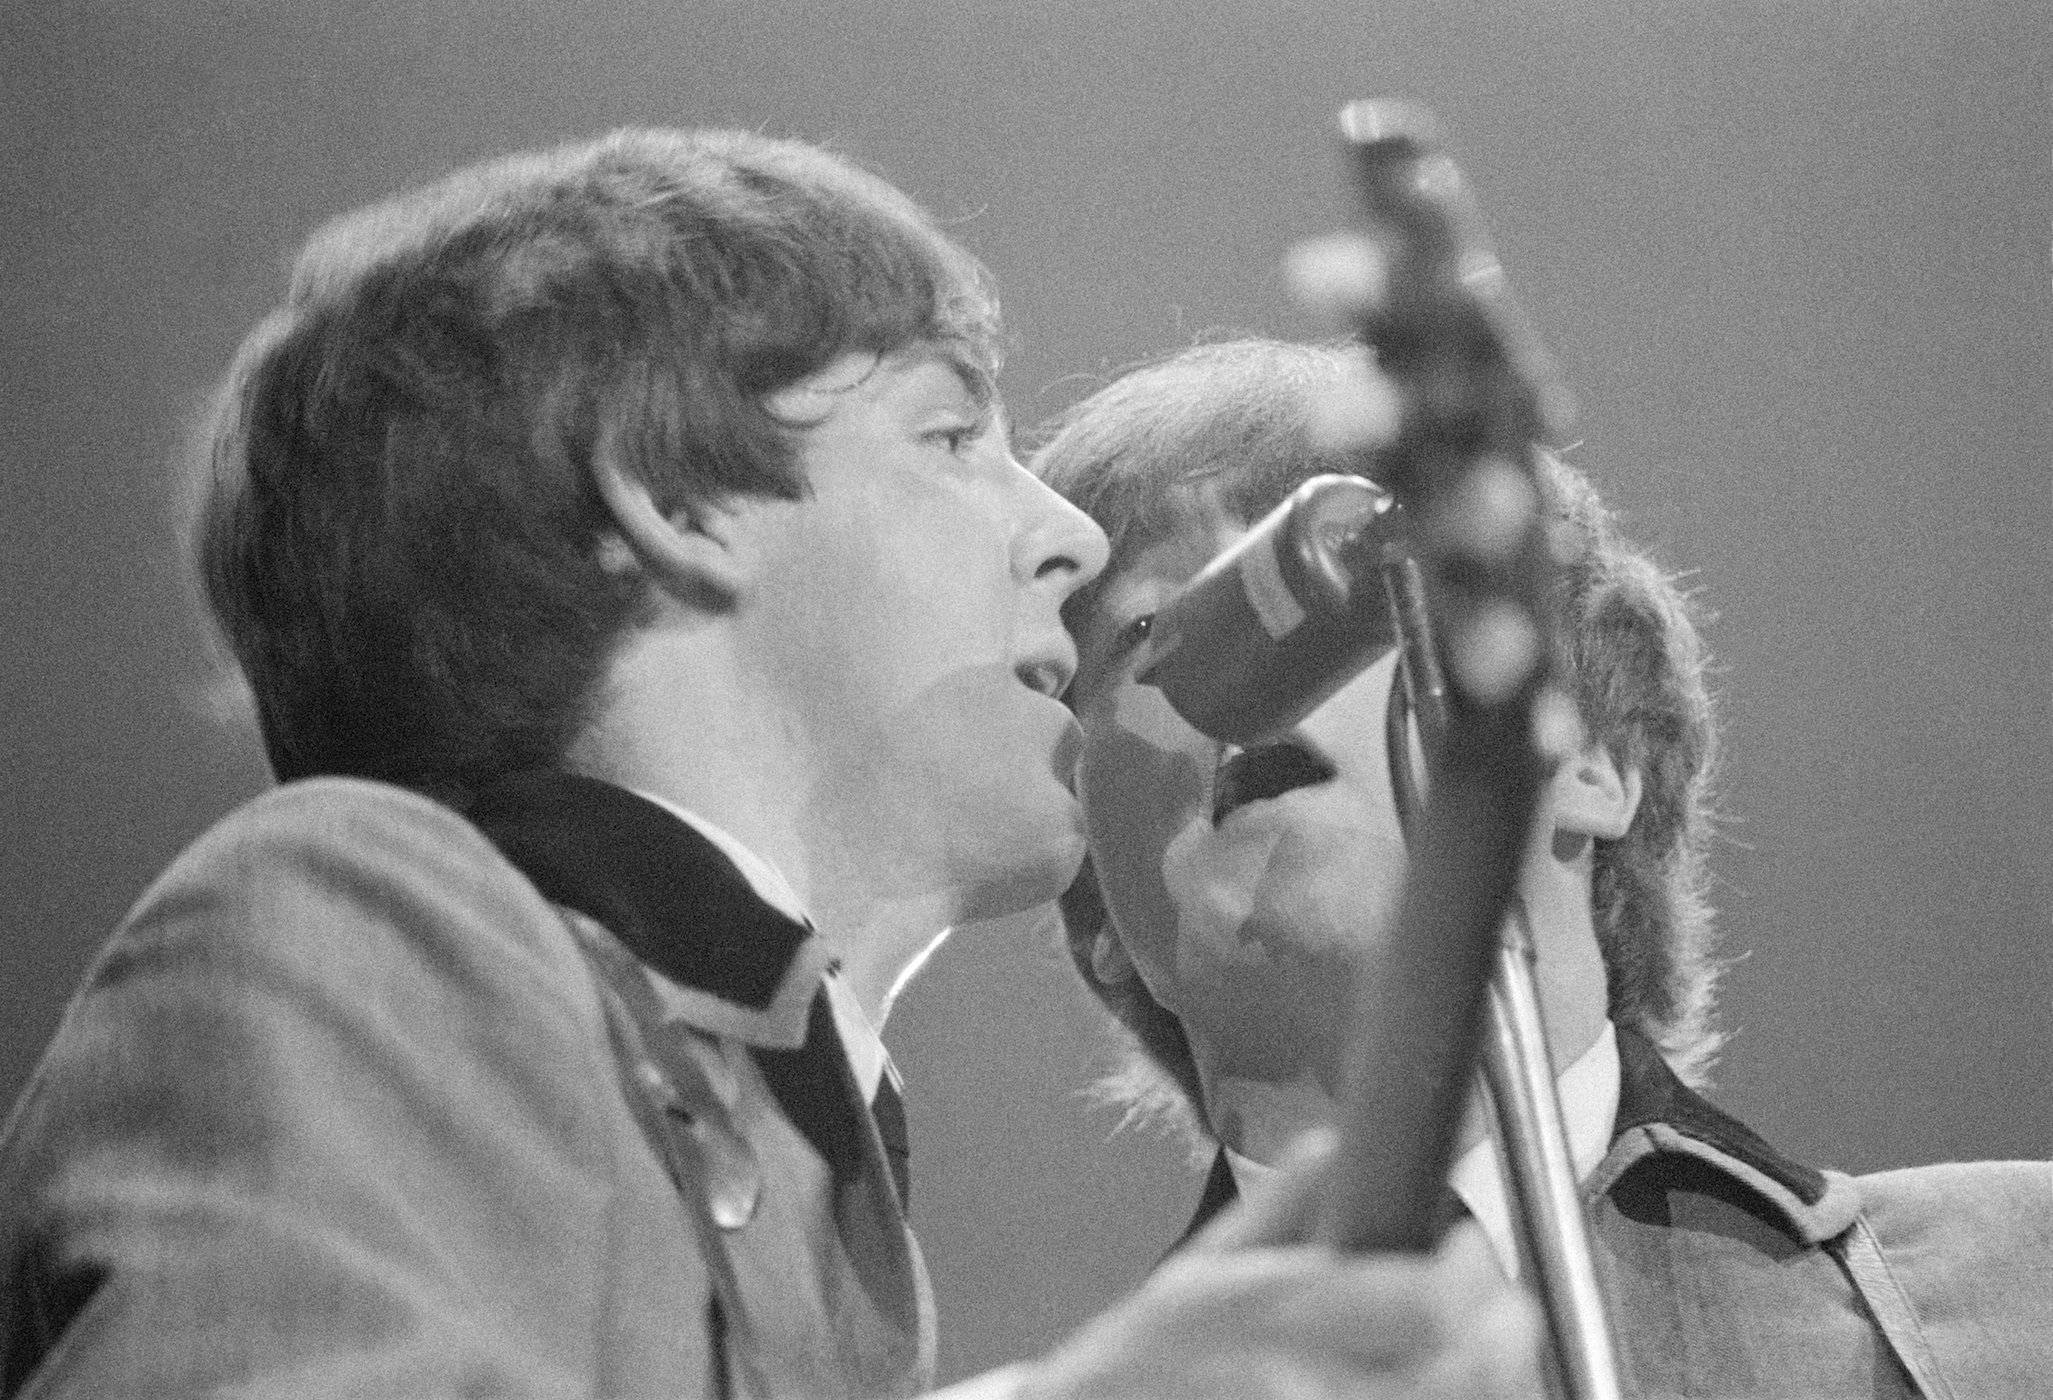 Paul McCartney and John Lennon of The Beatles perform at the Washington Coliseum in Washington DC